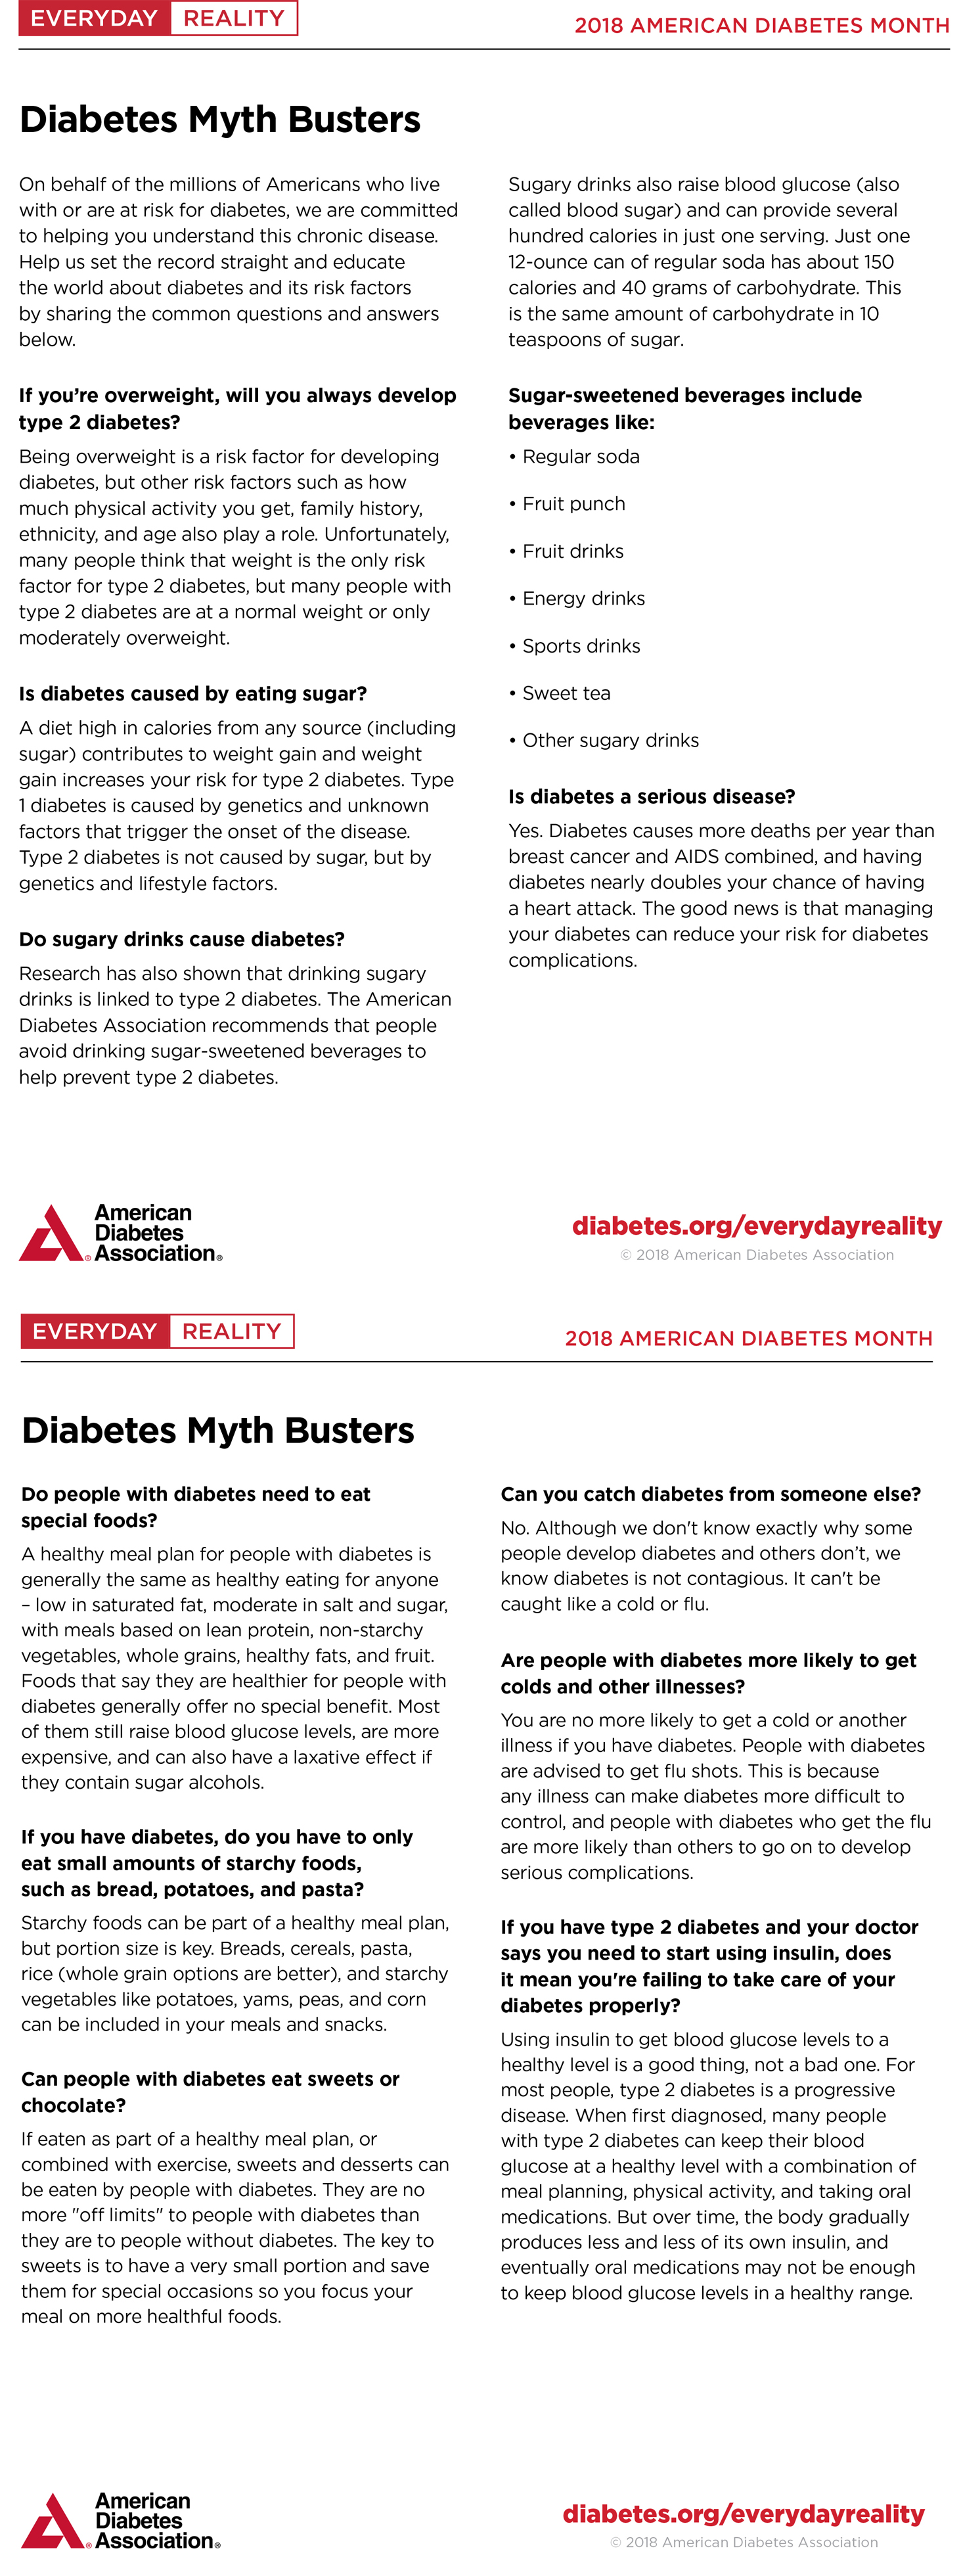 Diabetes Myth Busters